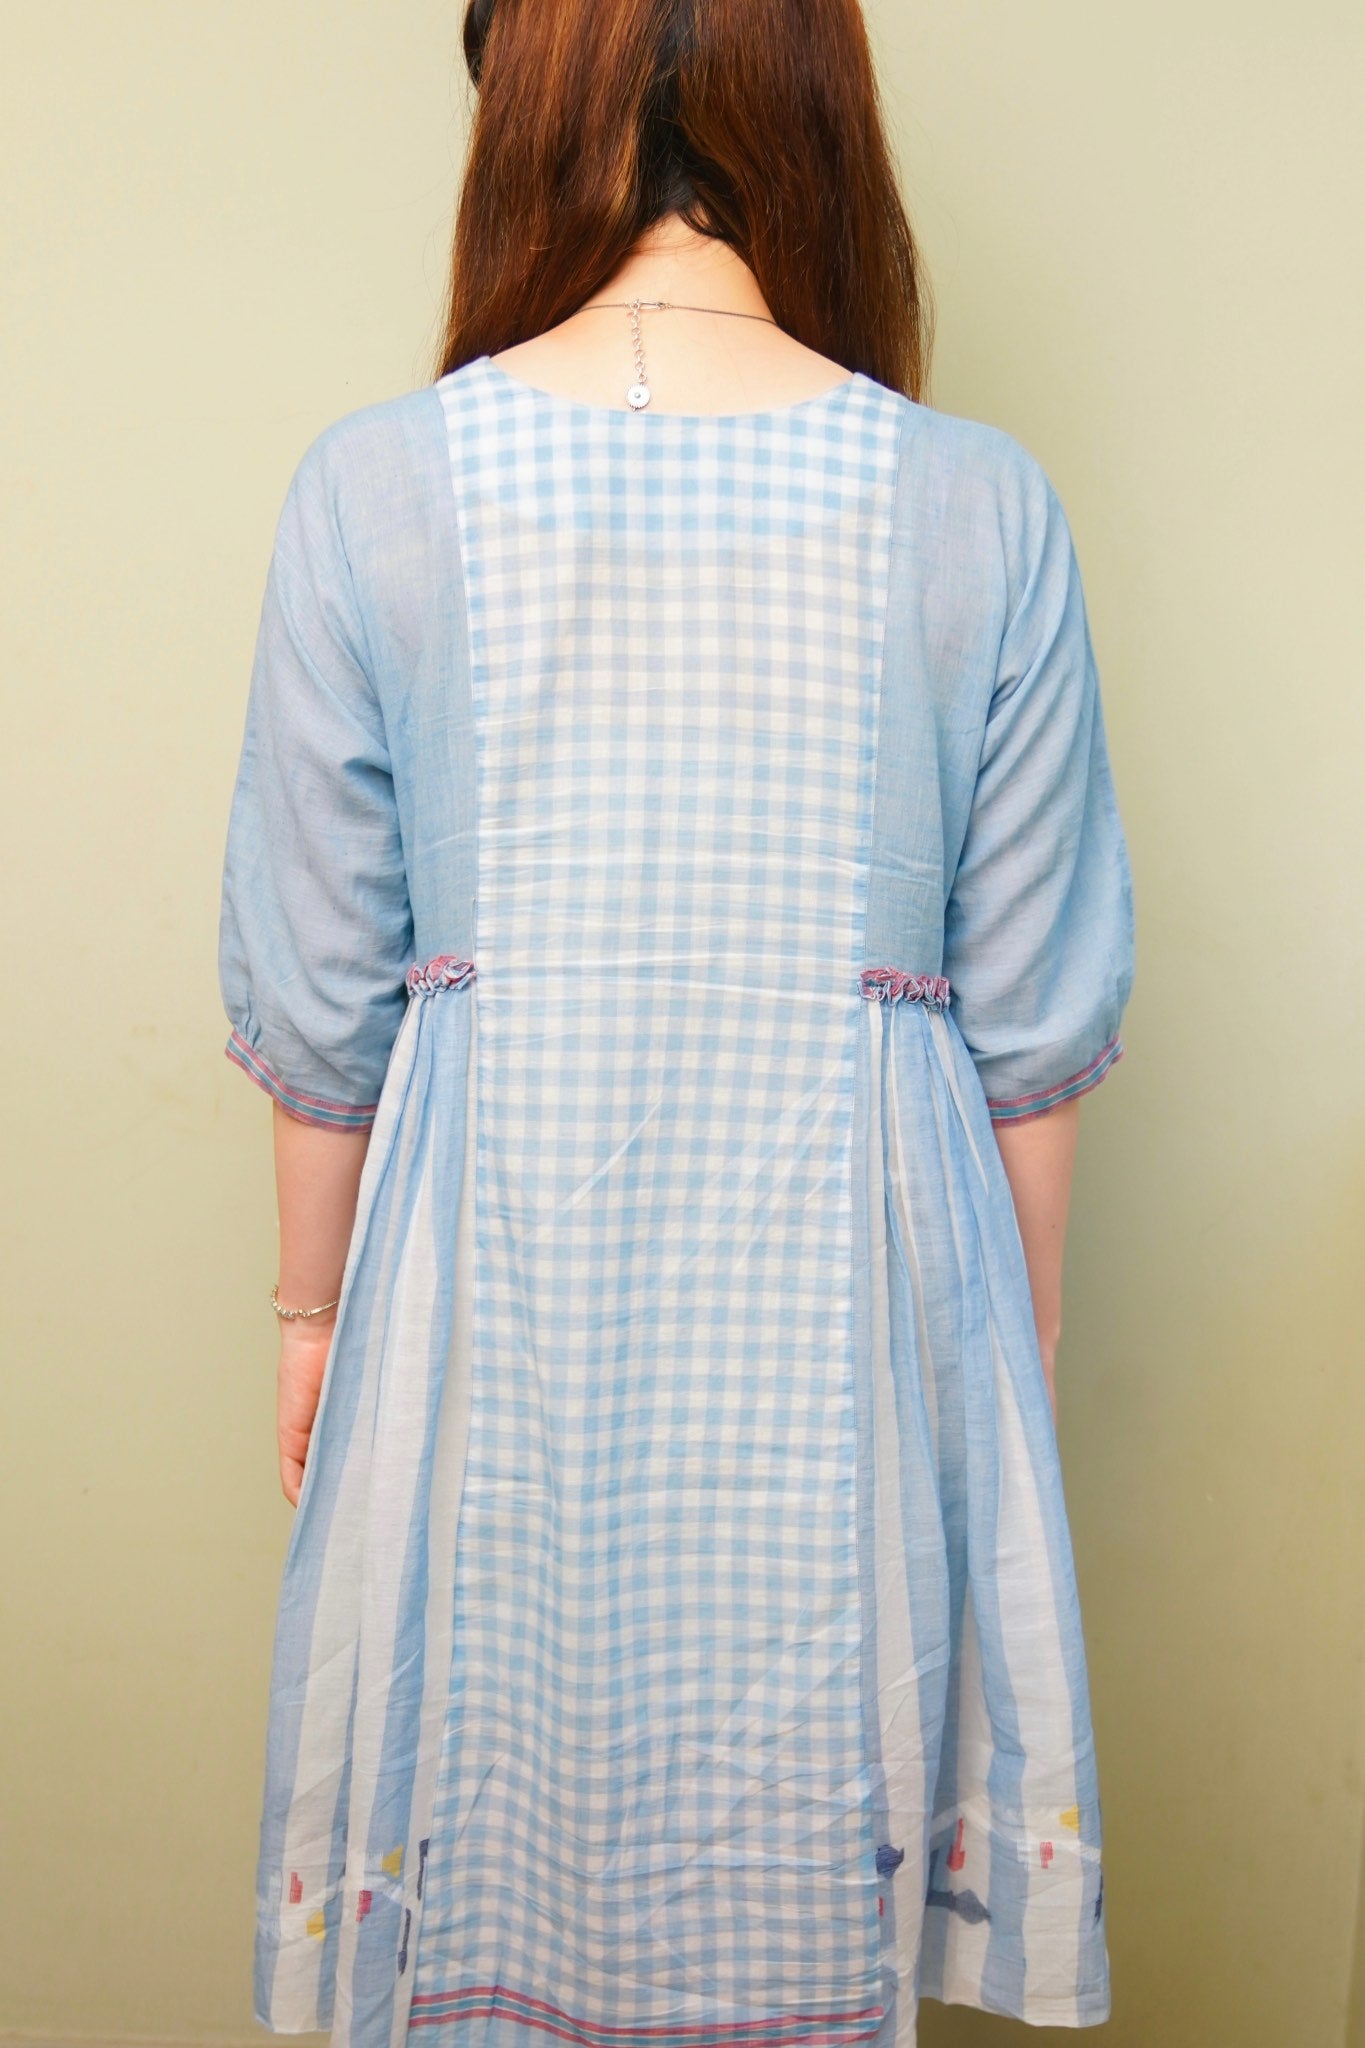 Kochi Blue and White Striped Dress with Checks, Jamdani details - Back